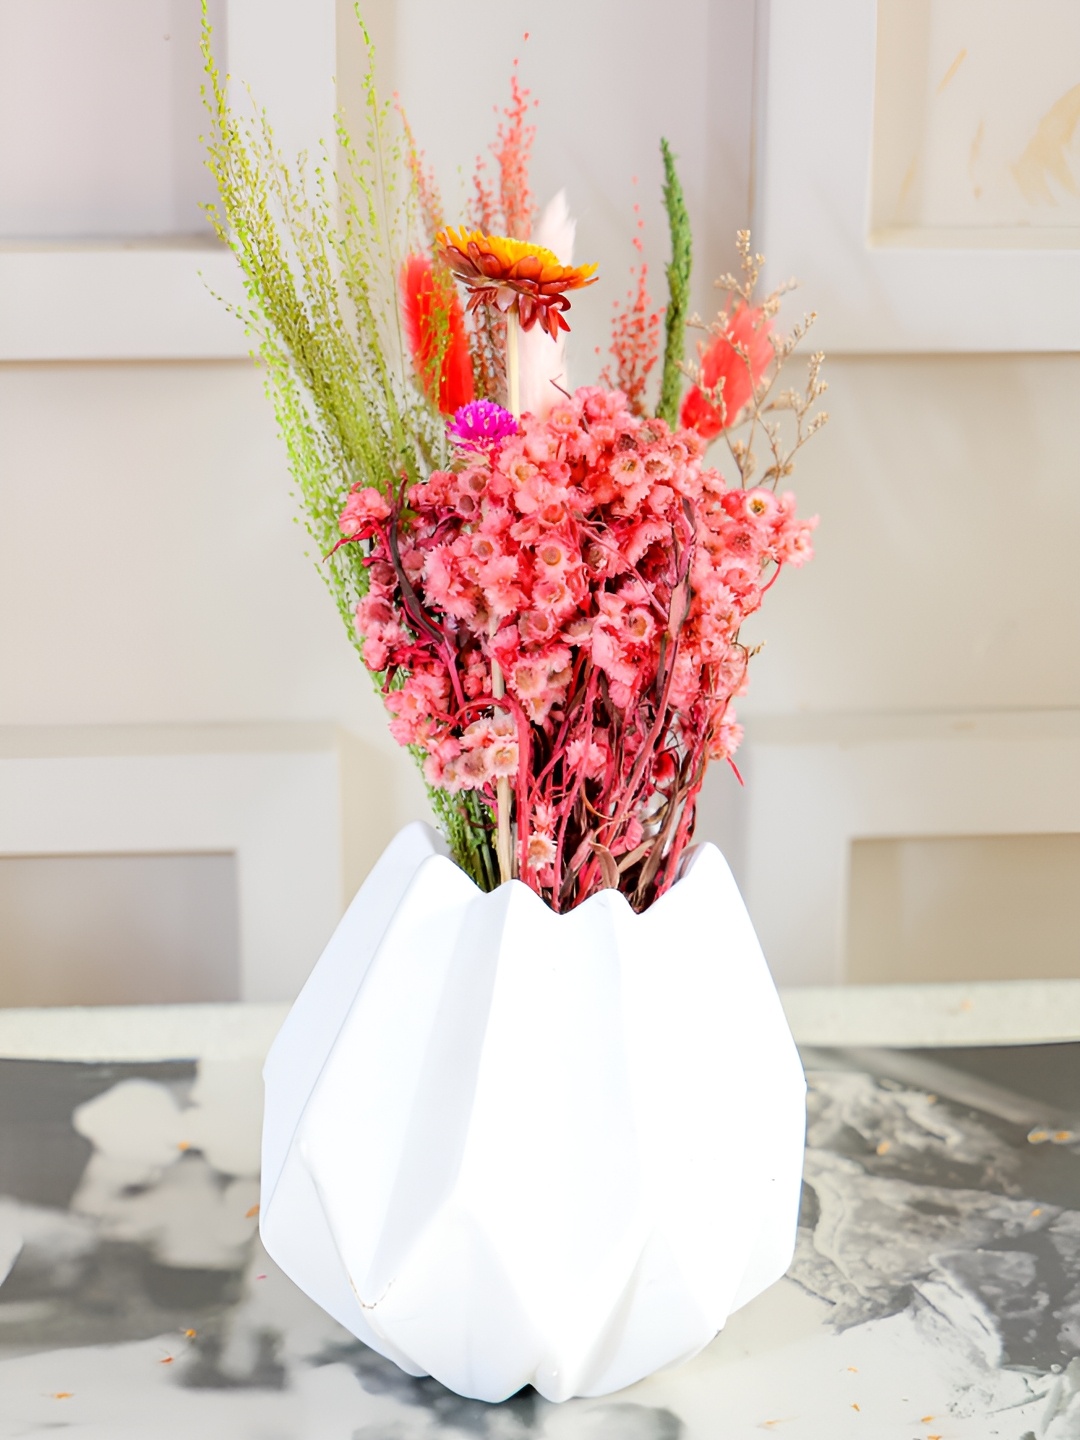 

Artecasa White Geometrical Vase with Spring Bunch